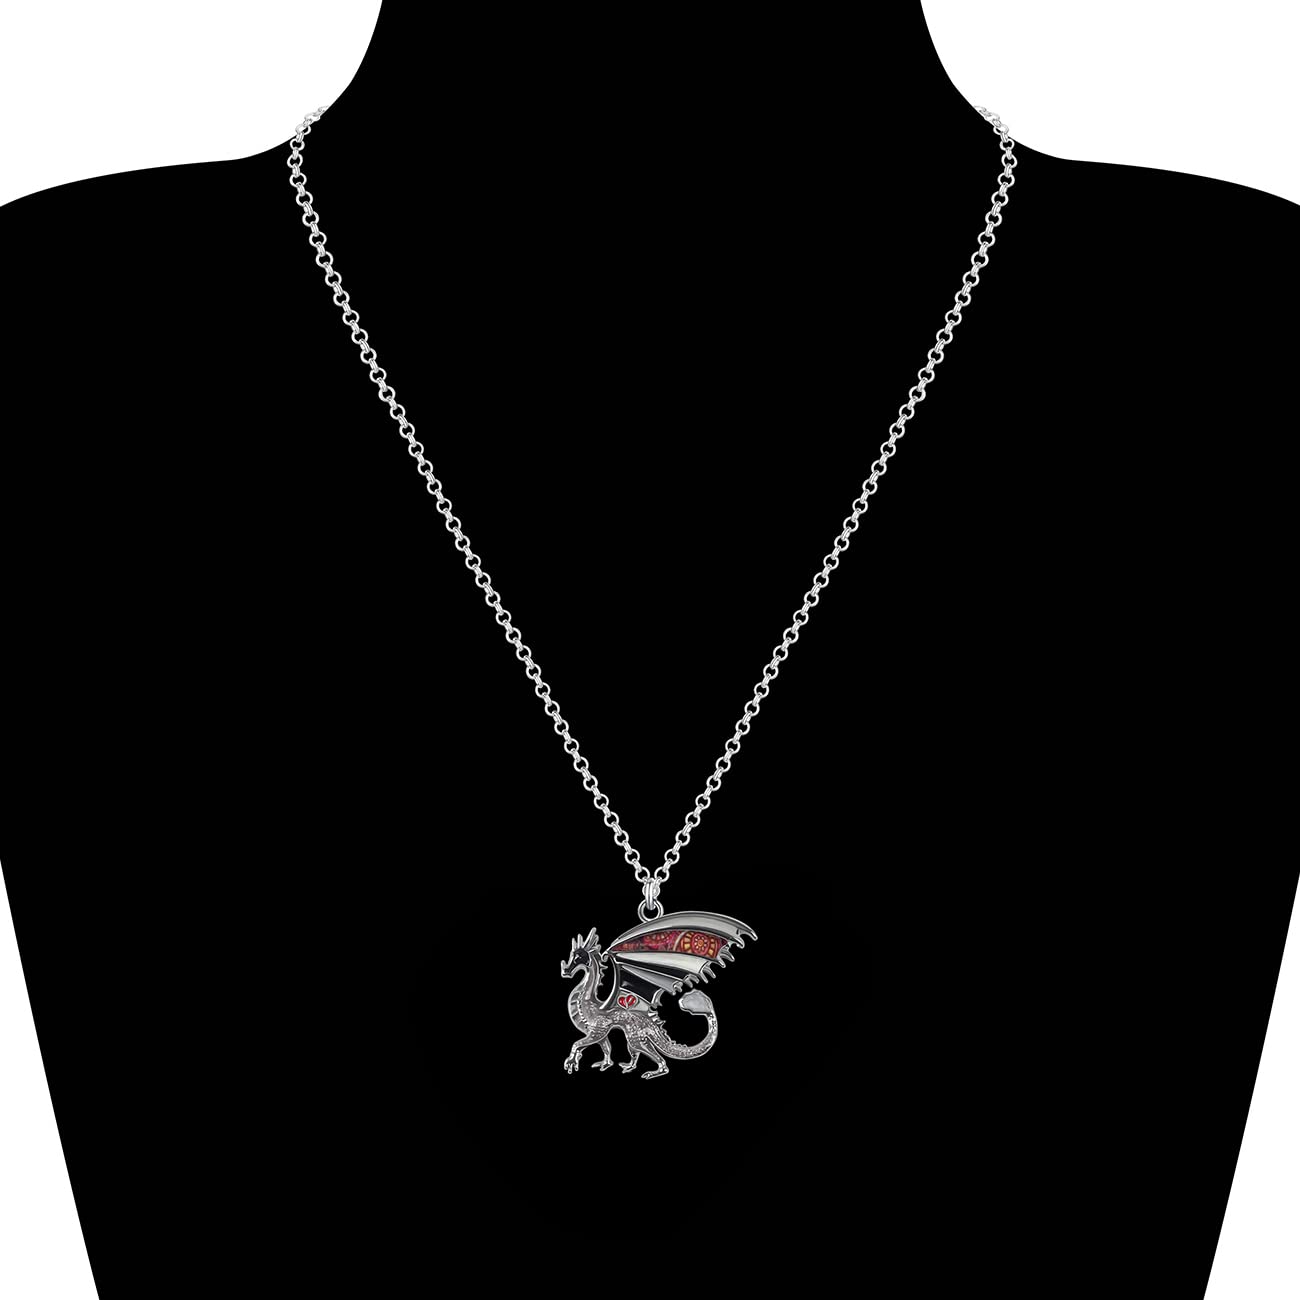 Enamel Alloy Dragon Pendant Necklace - Fantasy Dinosaur Charm Gift for Women - Blue